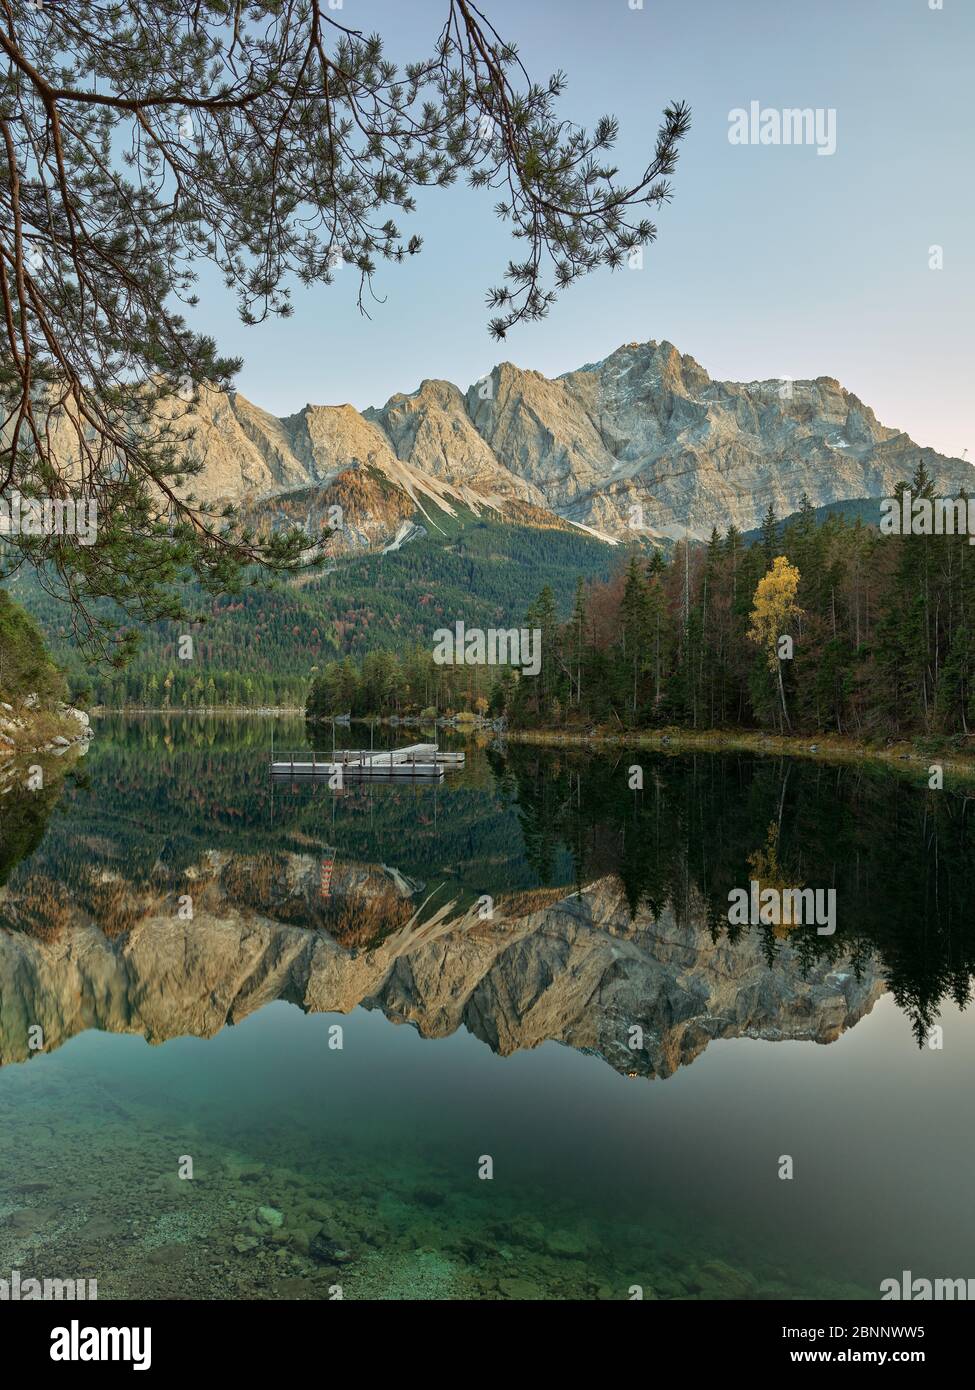 Lake, reflection, mountains, rock face, autumn, fall, mountain forest, bay Stock Photo